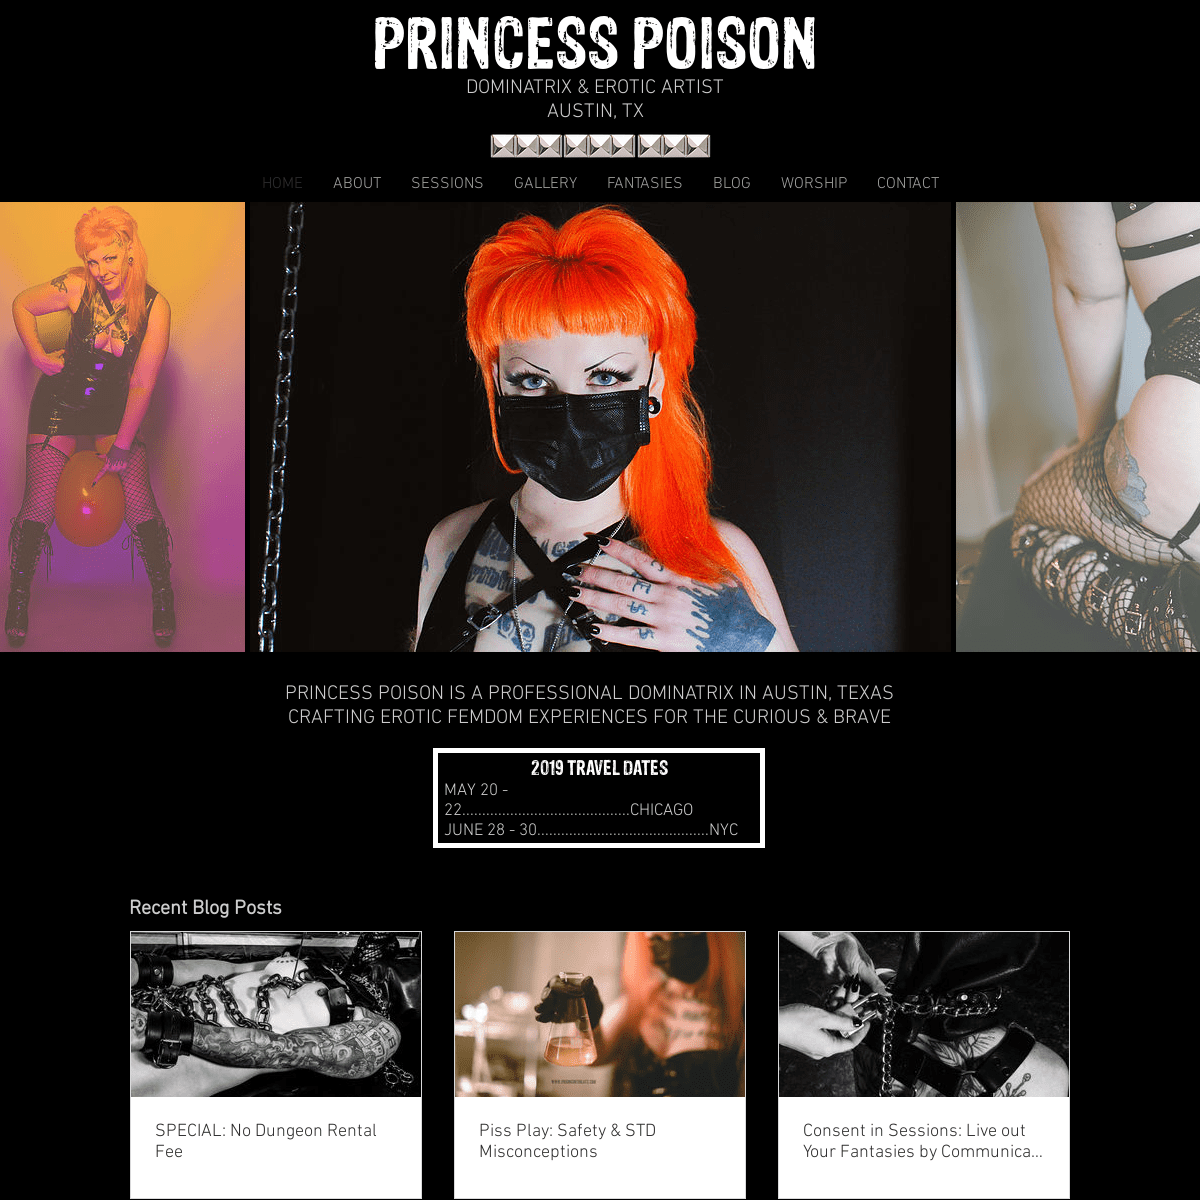 Austin Dominatrix Princess Poison - Erotic BDSM Artist